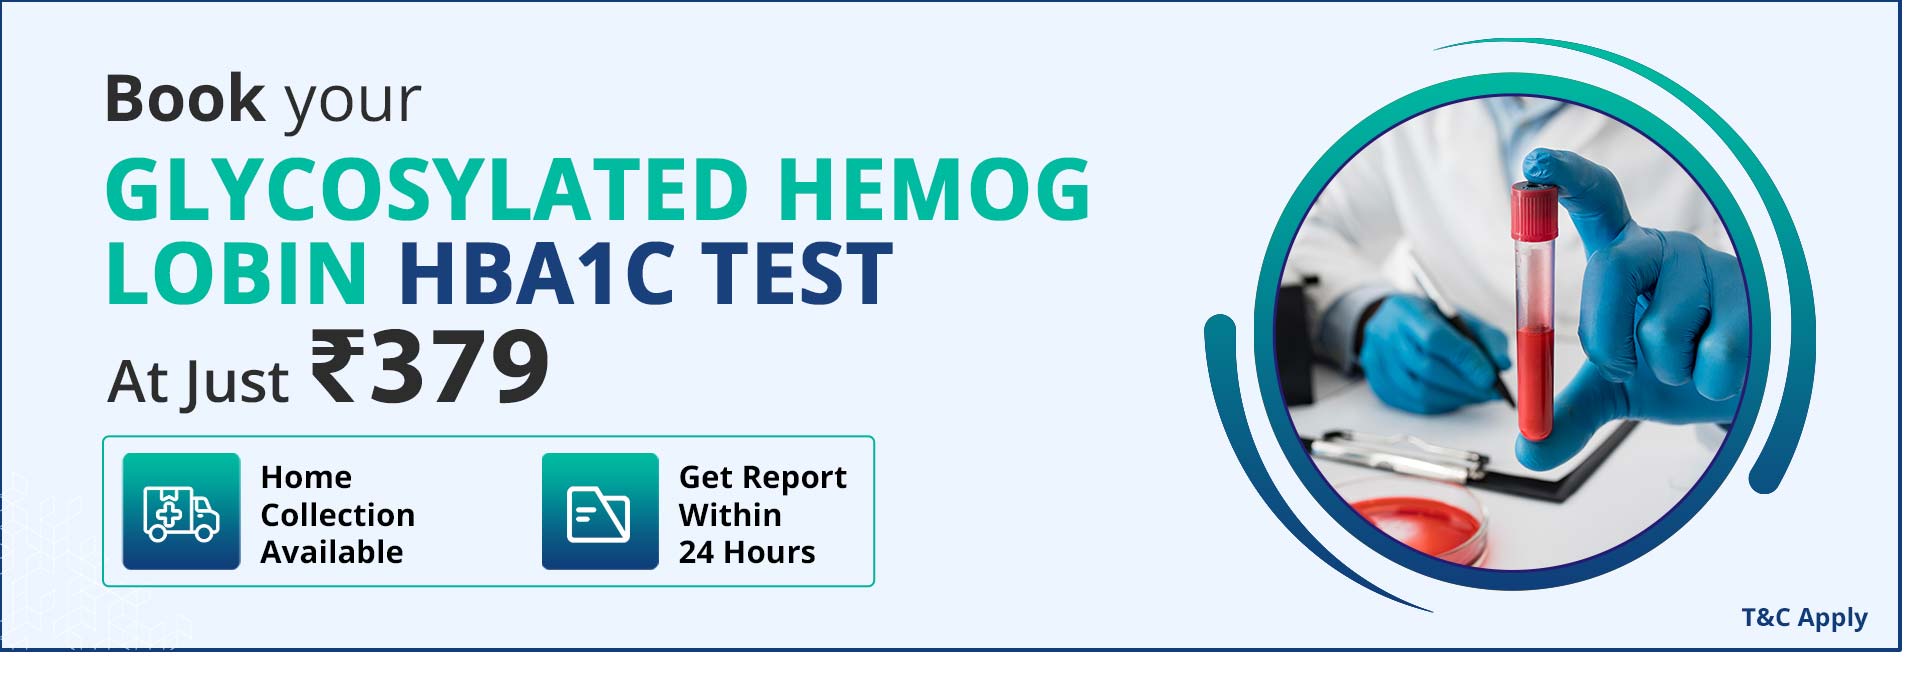 Glycosylated Hemoglobin HbA1c Test